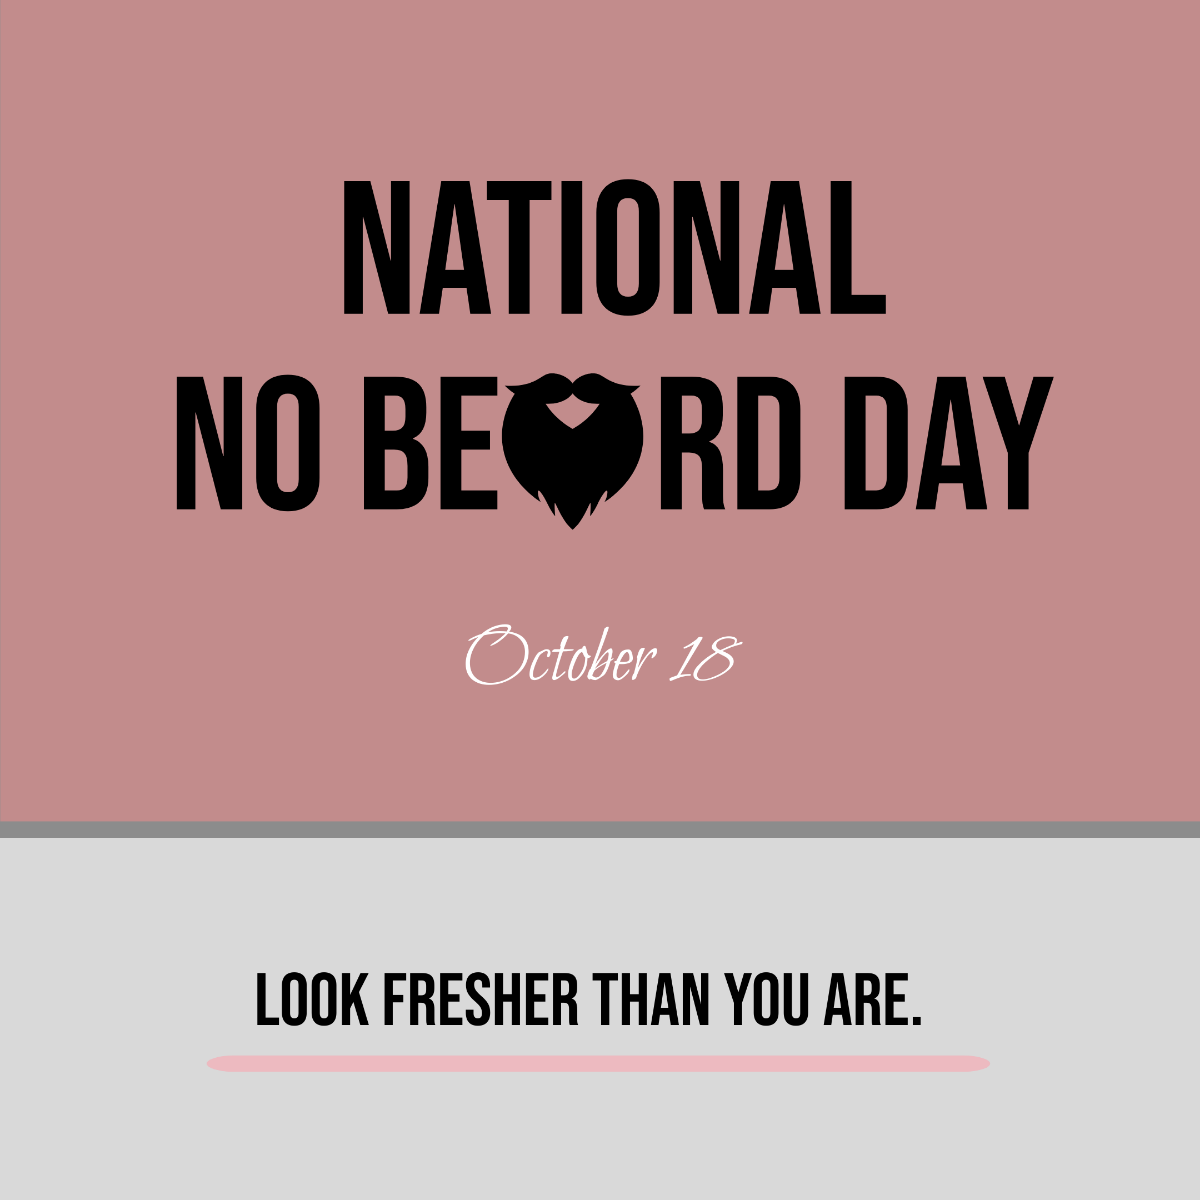 National No Beard Day FB Post Template